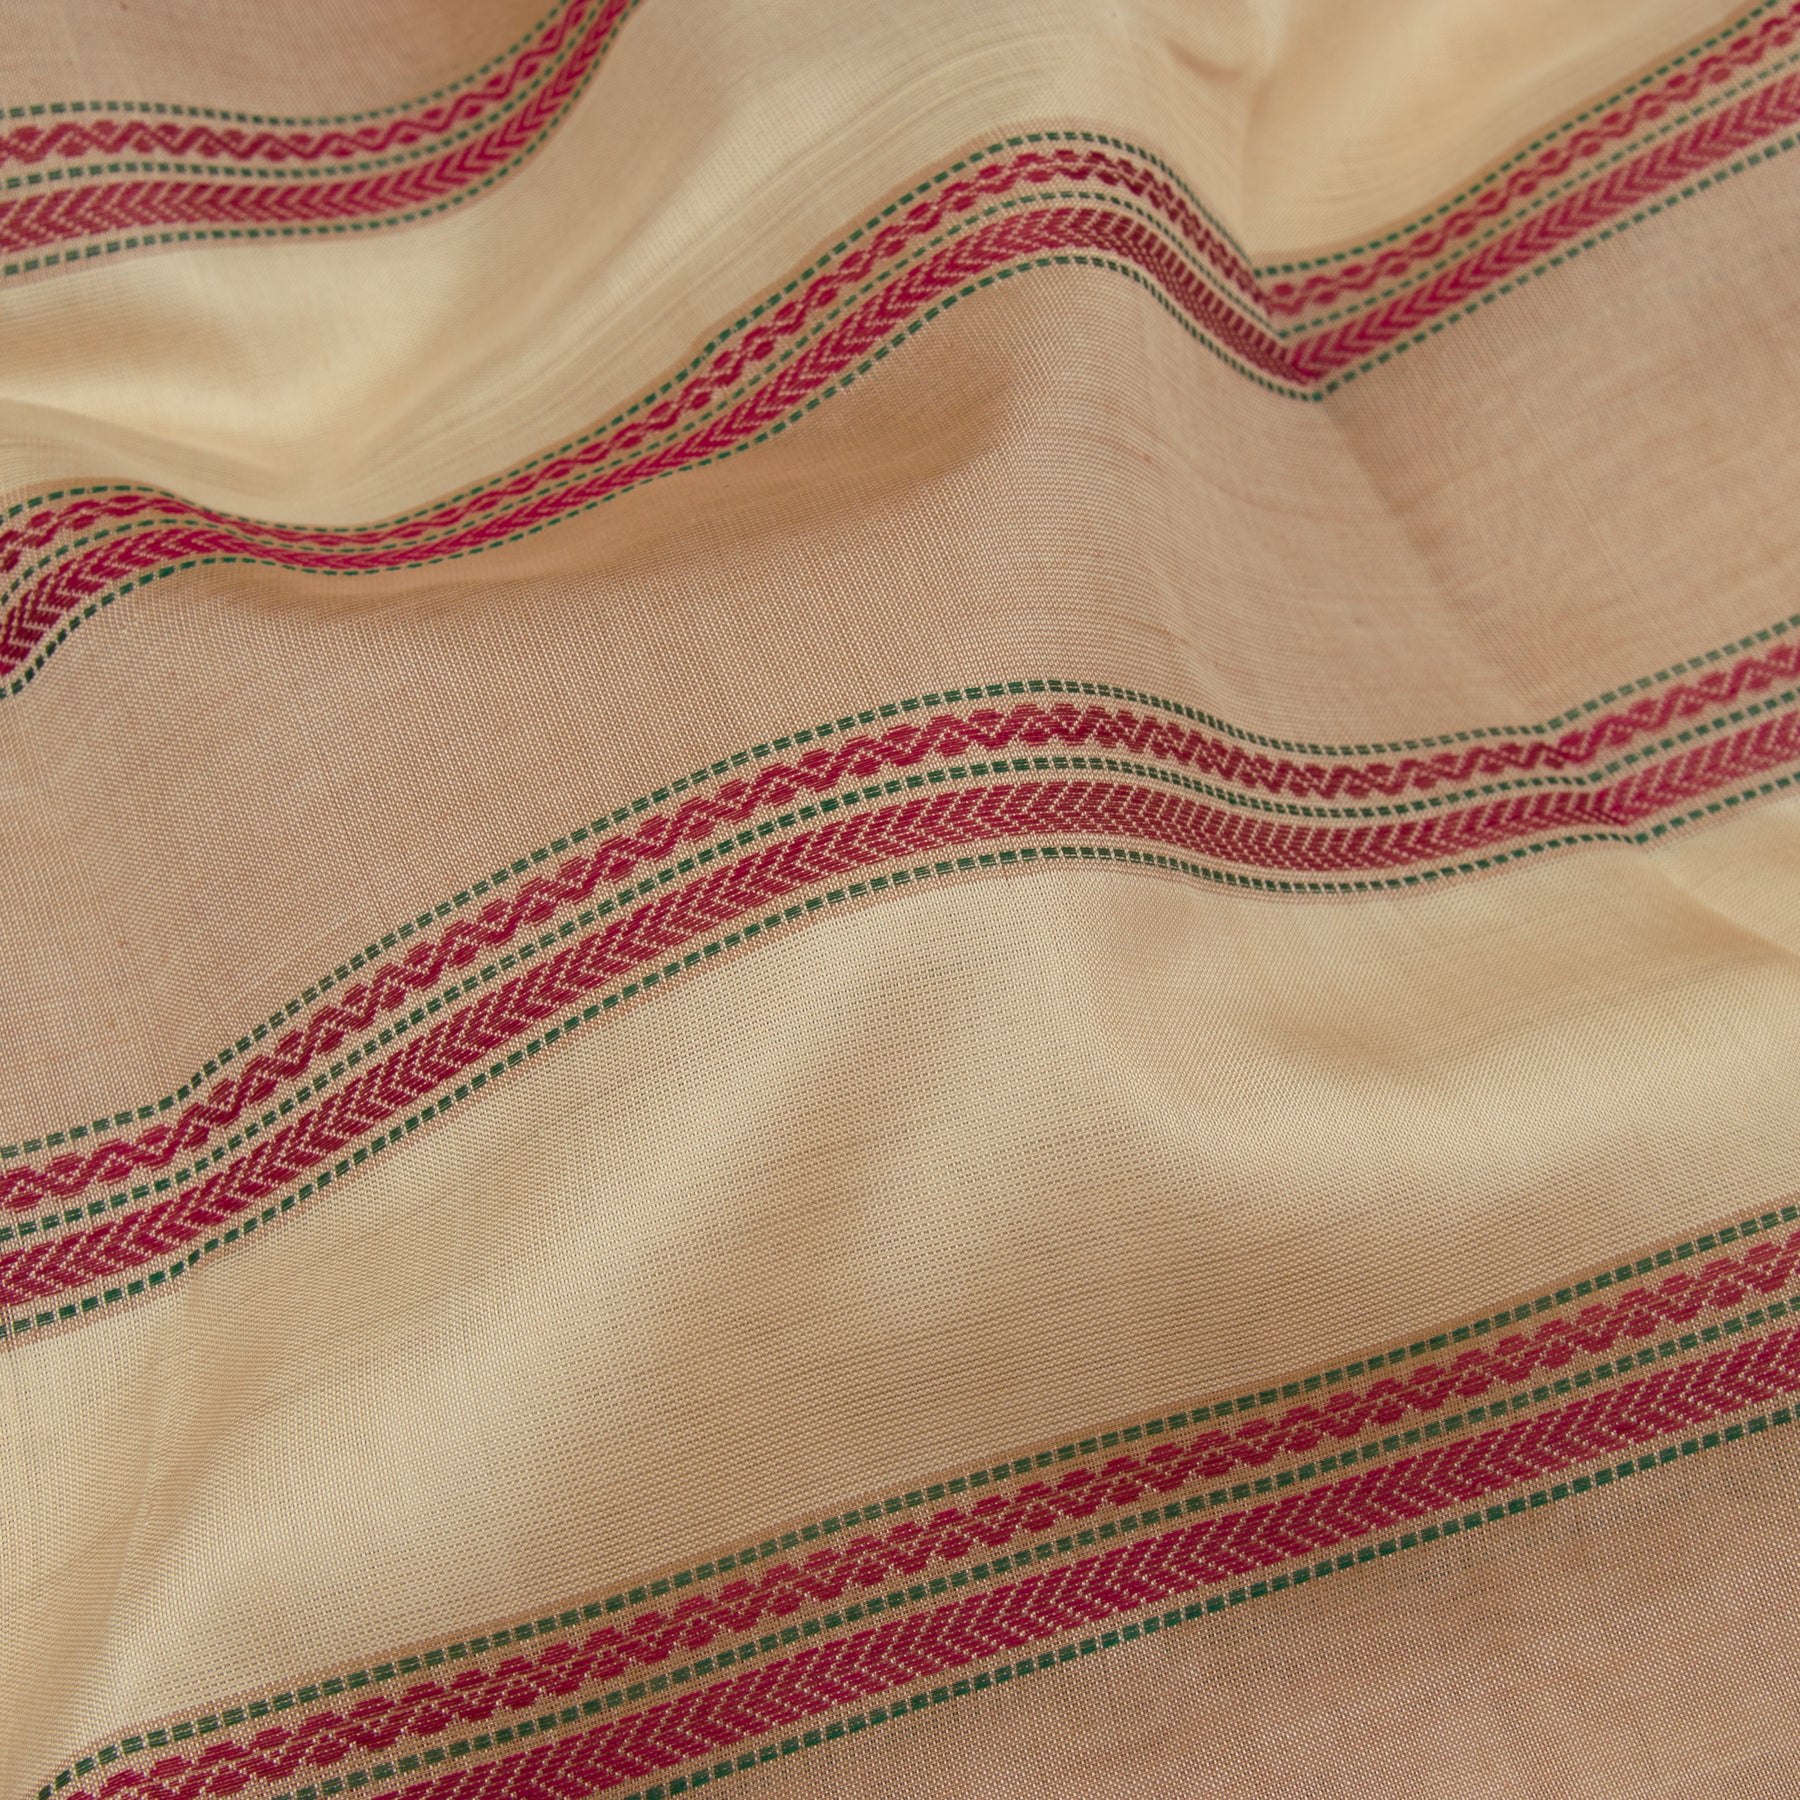 Kanakavalli Silk/Cotton Sari 22-598-HS005-09972 - Fabric View